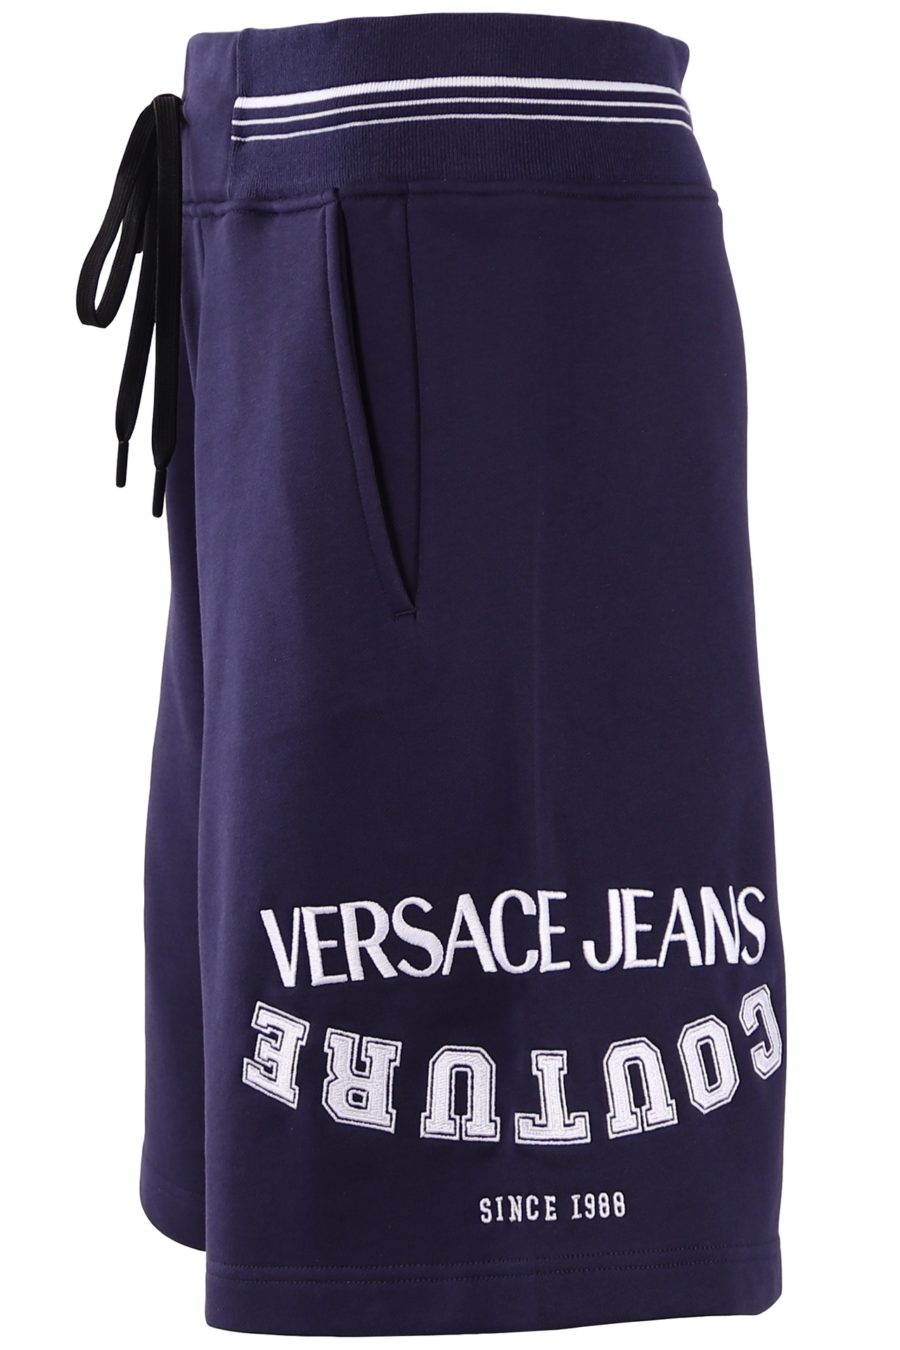 Pantalón corto Versace Jeans Couture azul - 459d723fee96e6b5bf0c95f1e4e3b5d3d82962a2